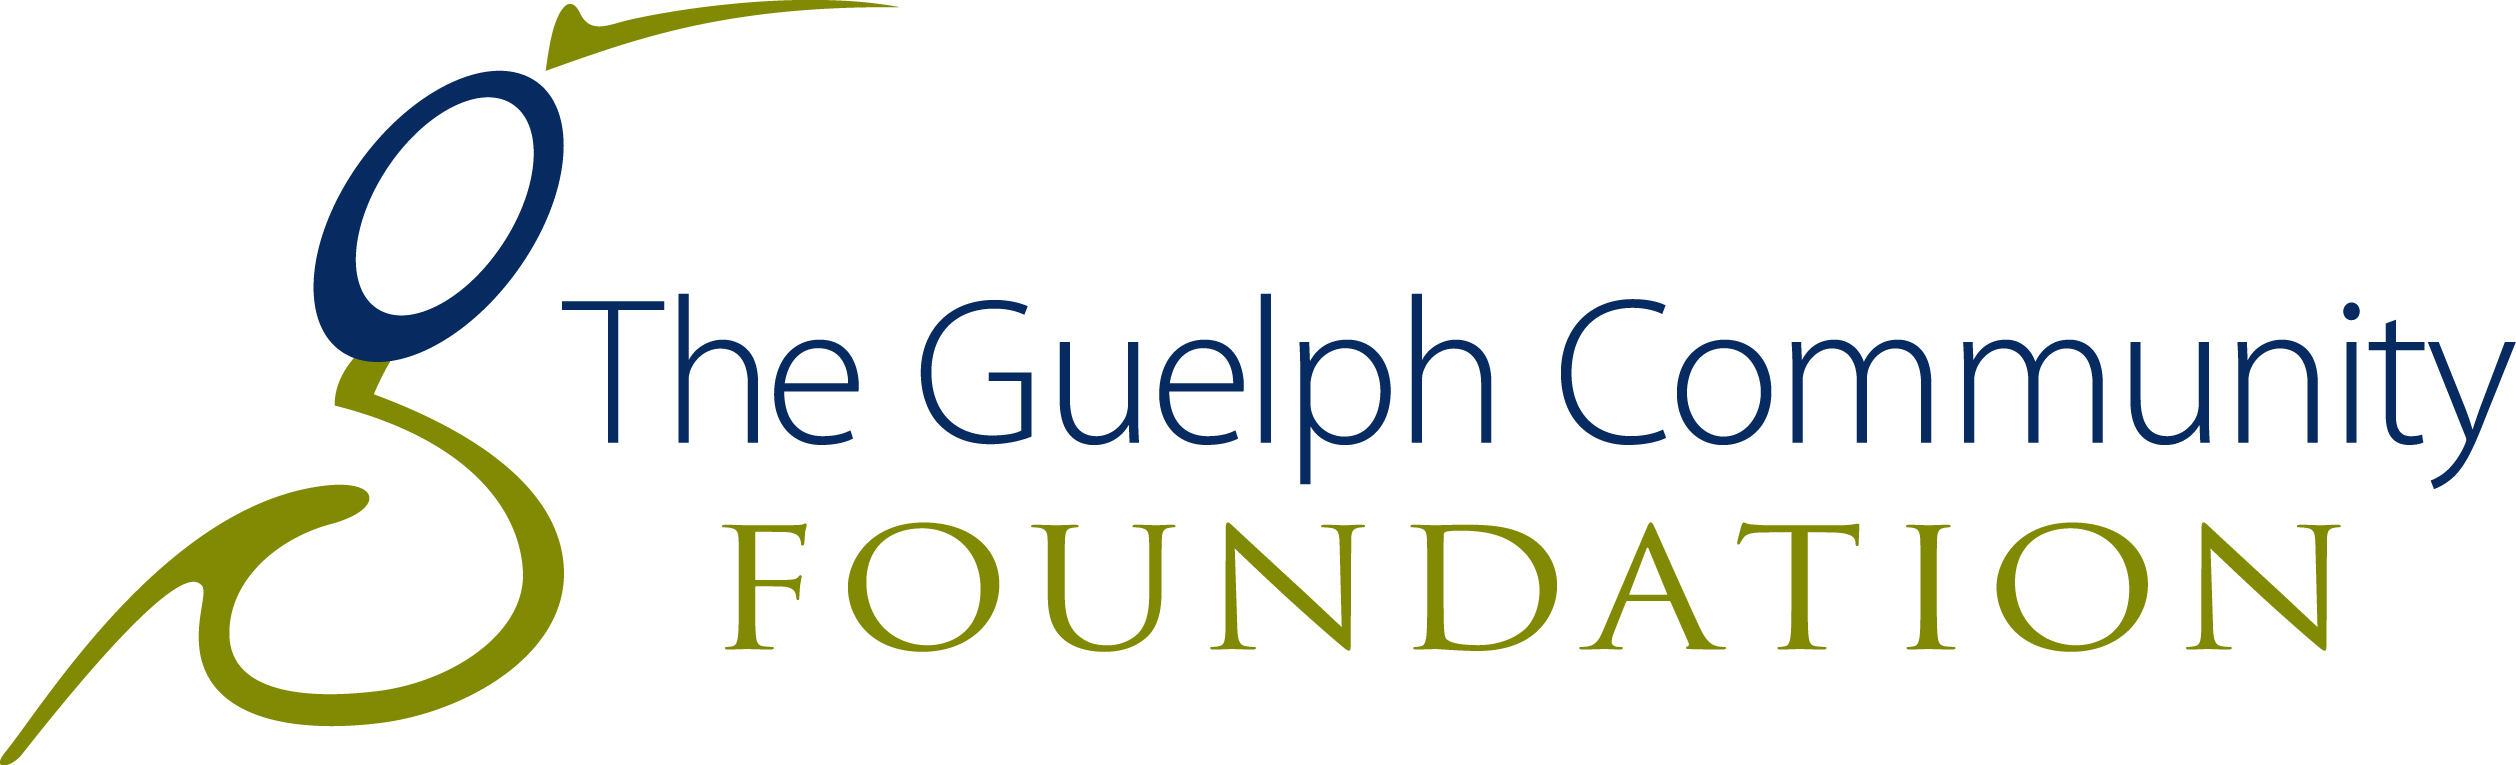 The Guelph Community Foundation Logo